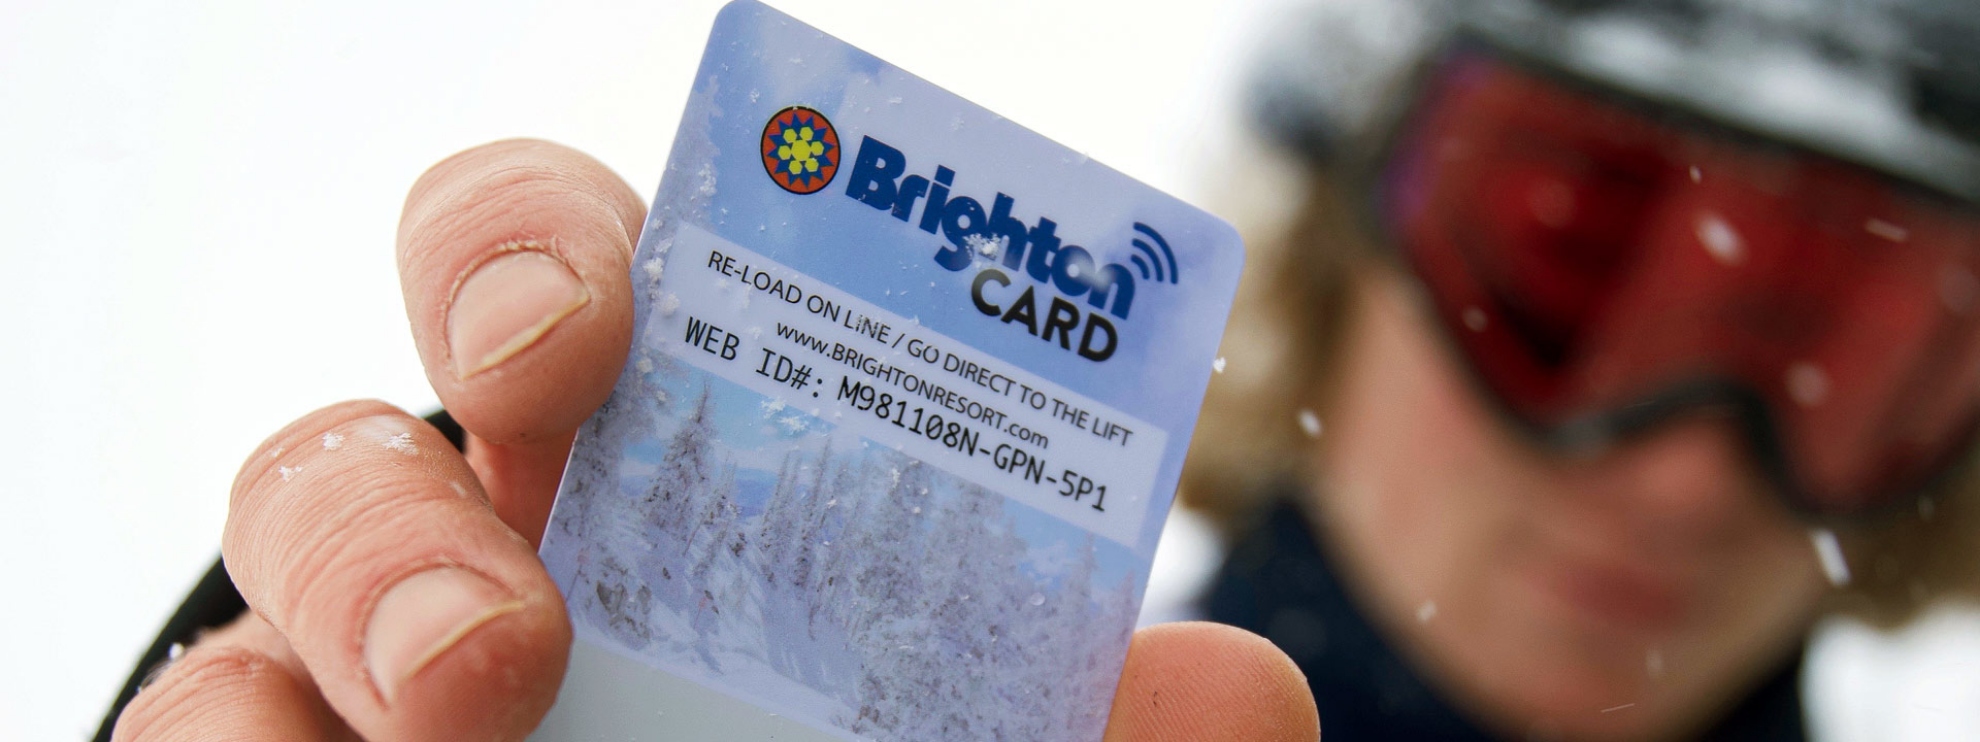 Snowboarder displaying his Brighton Card